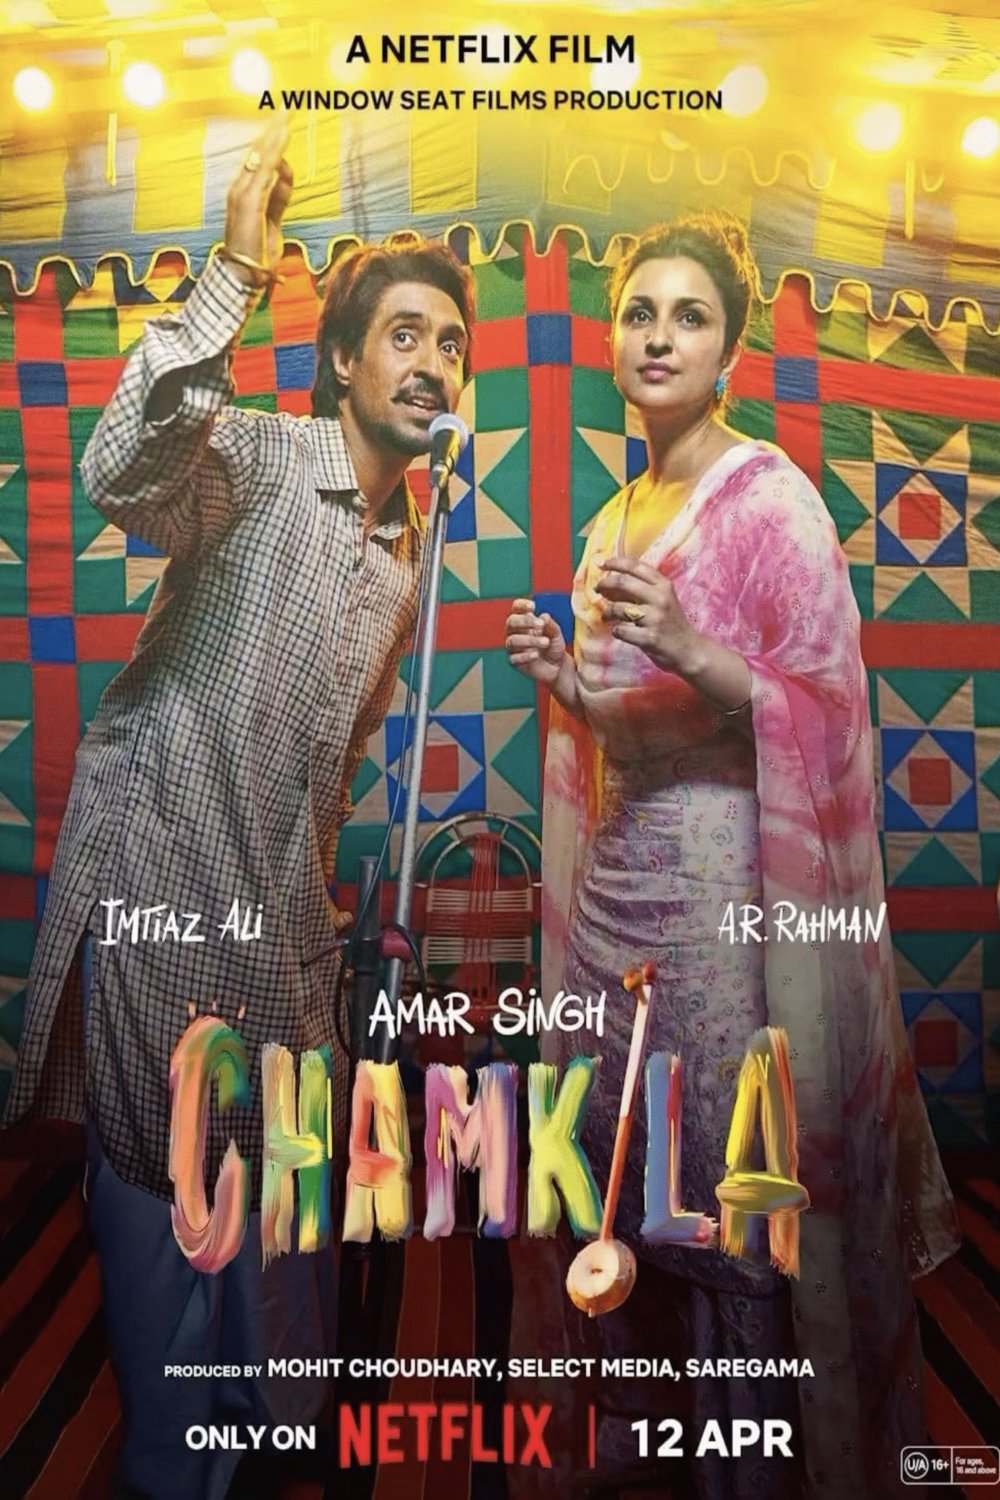 Punjabi poster of the movie Chamkila